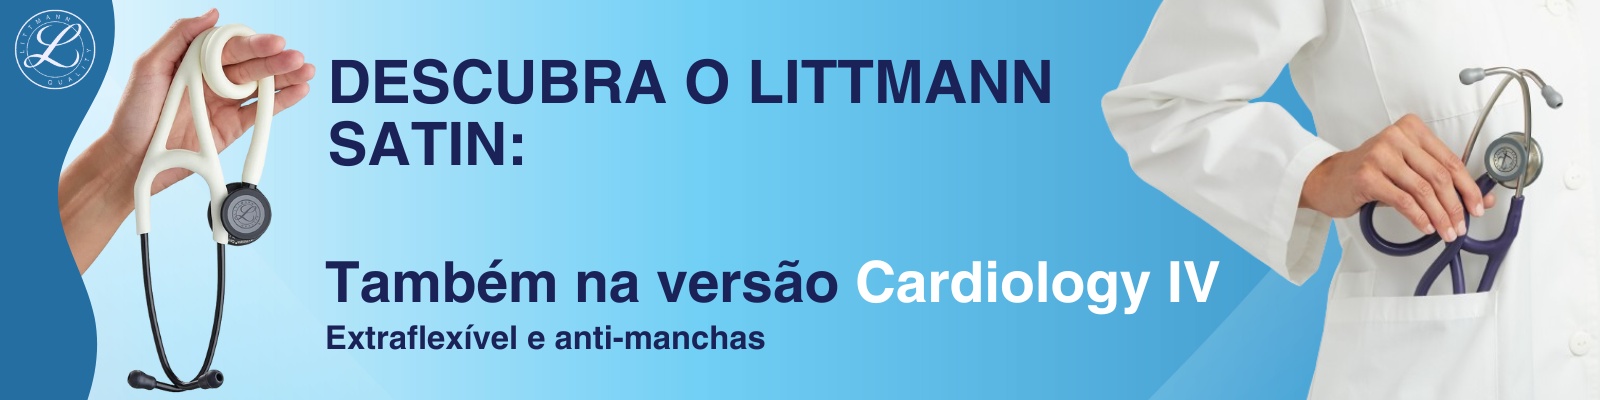 Littmann cardiology IV - acetinado homepage